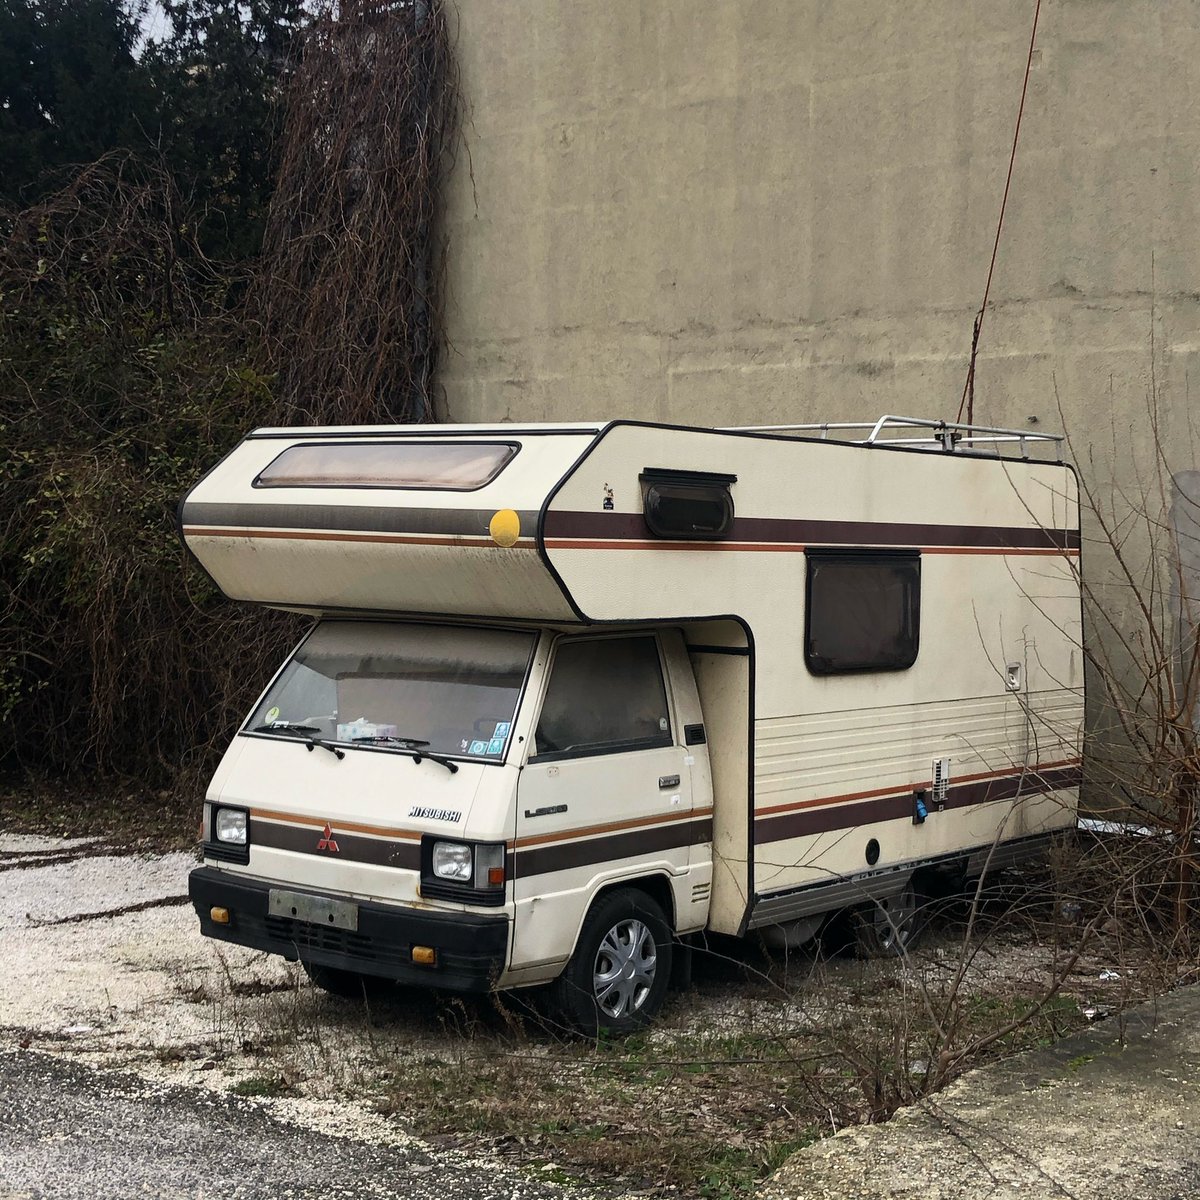 Mitsubishi L300 Campervan (2nd gen facelift, 1982-6) spotted in Budapest.
#MitsubishiL300 #MitsubishiDelica #homeiswhereyouparkit 
@GeorgeCochrane1 @addict_car @Rockstarscars @YesterdaysDrive @ChodSpot